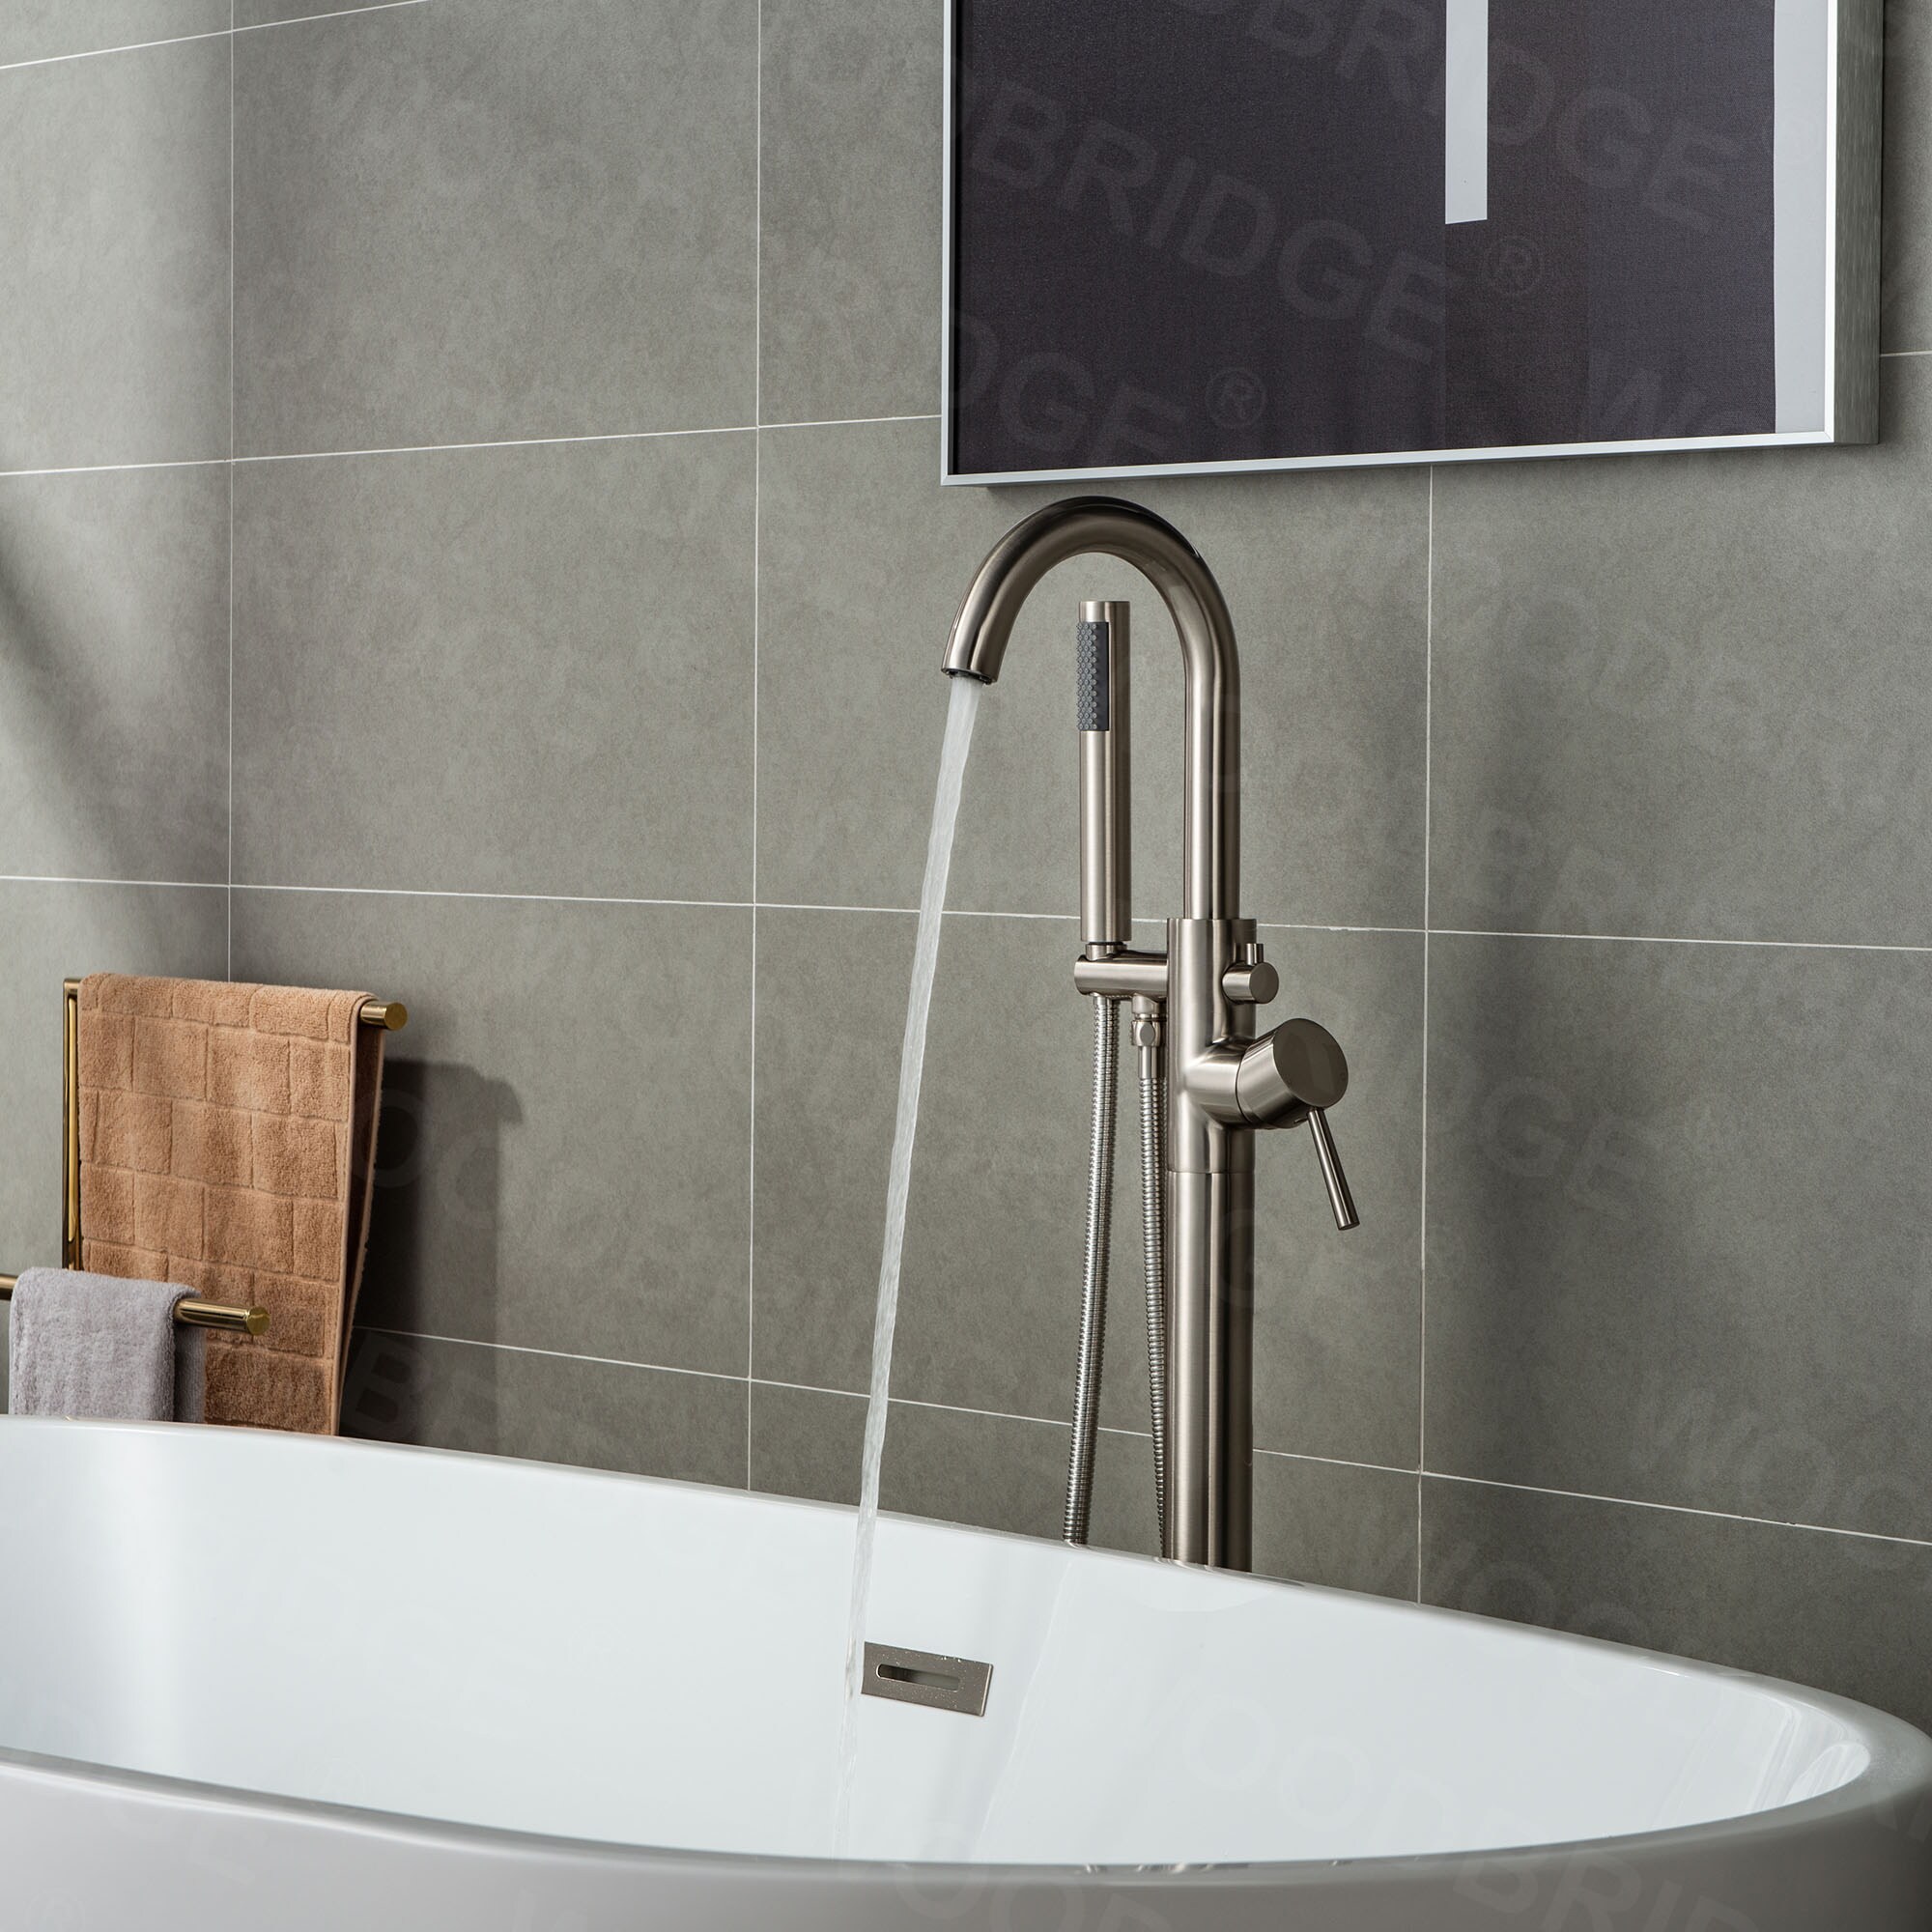 Brushed Nickel Details about   Woodbridge F-0001 Freestanding Bathtub Faucet 